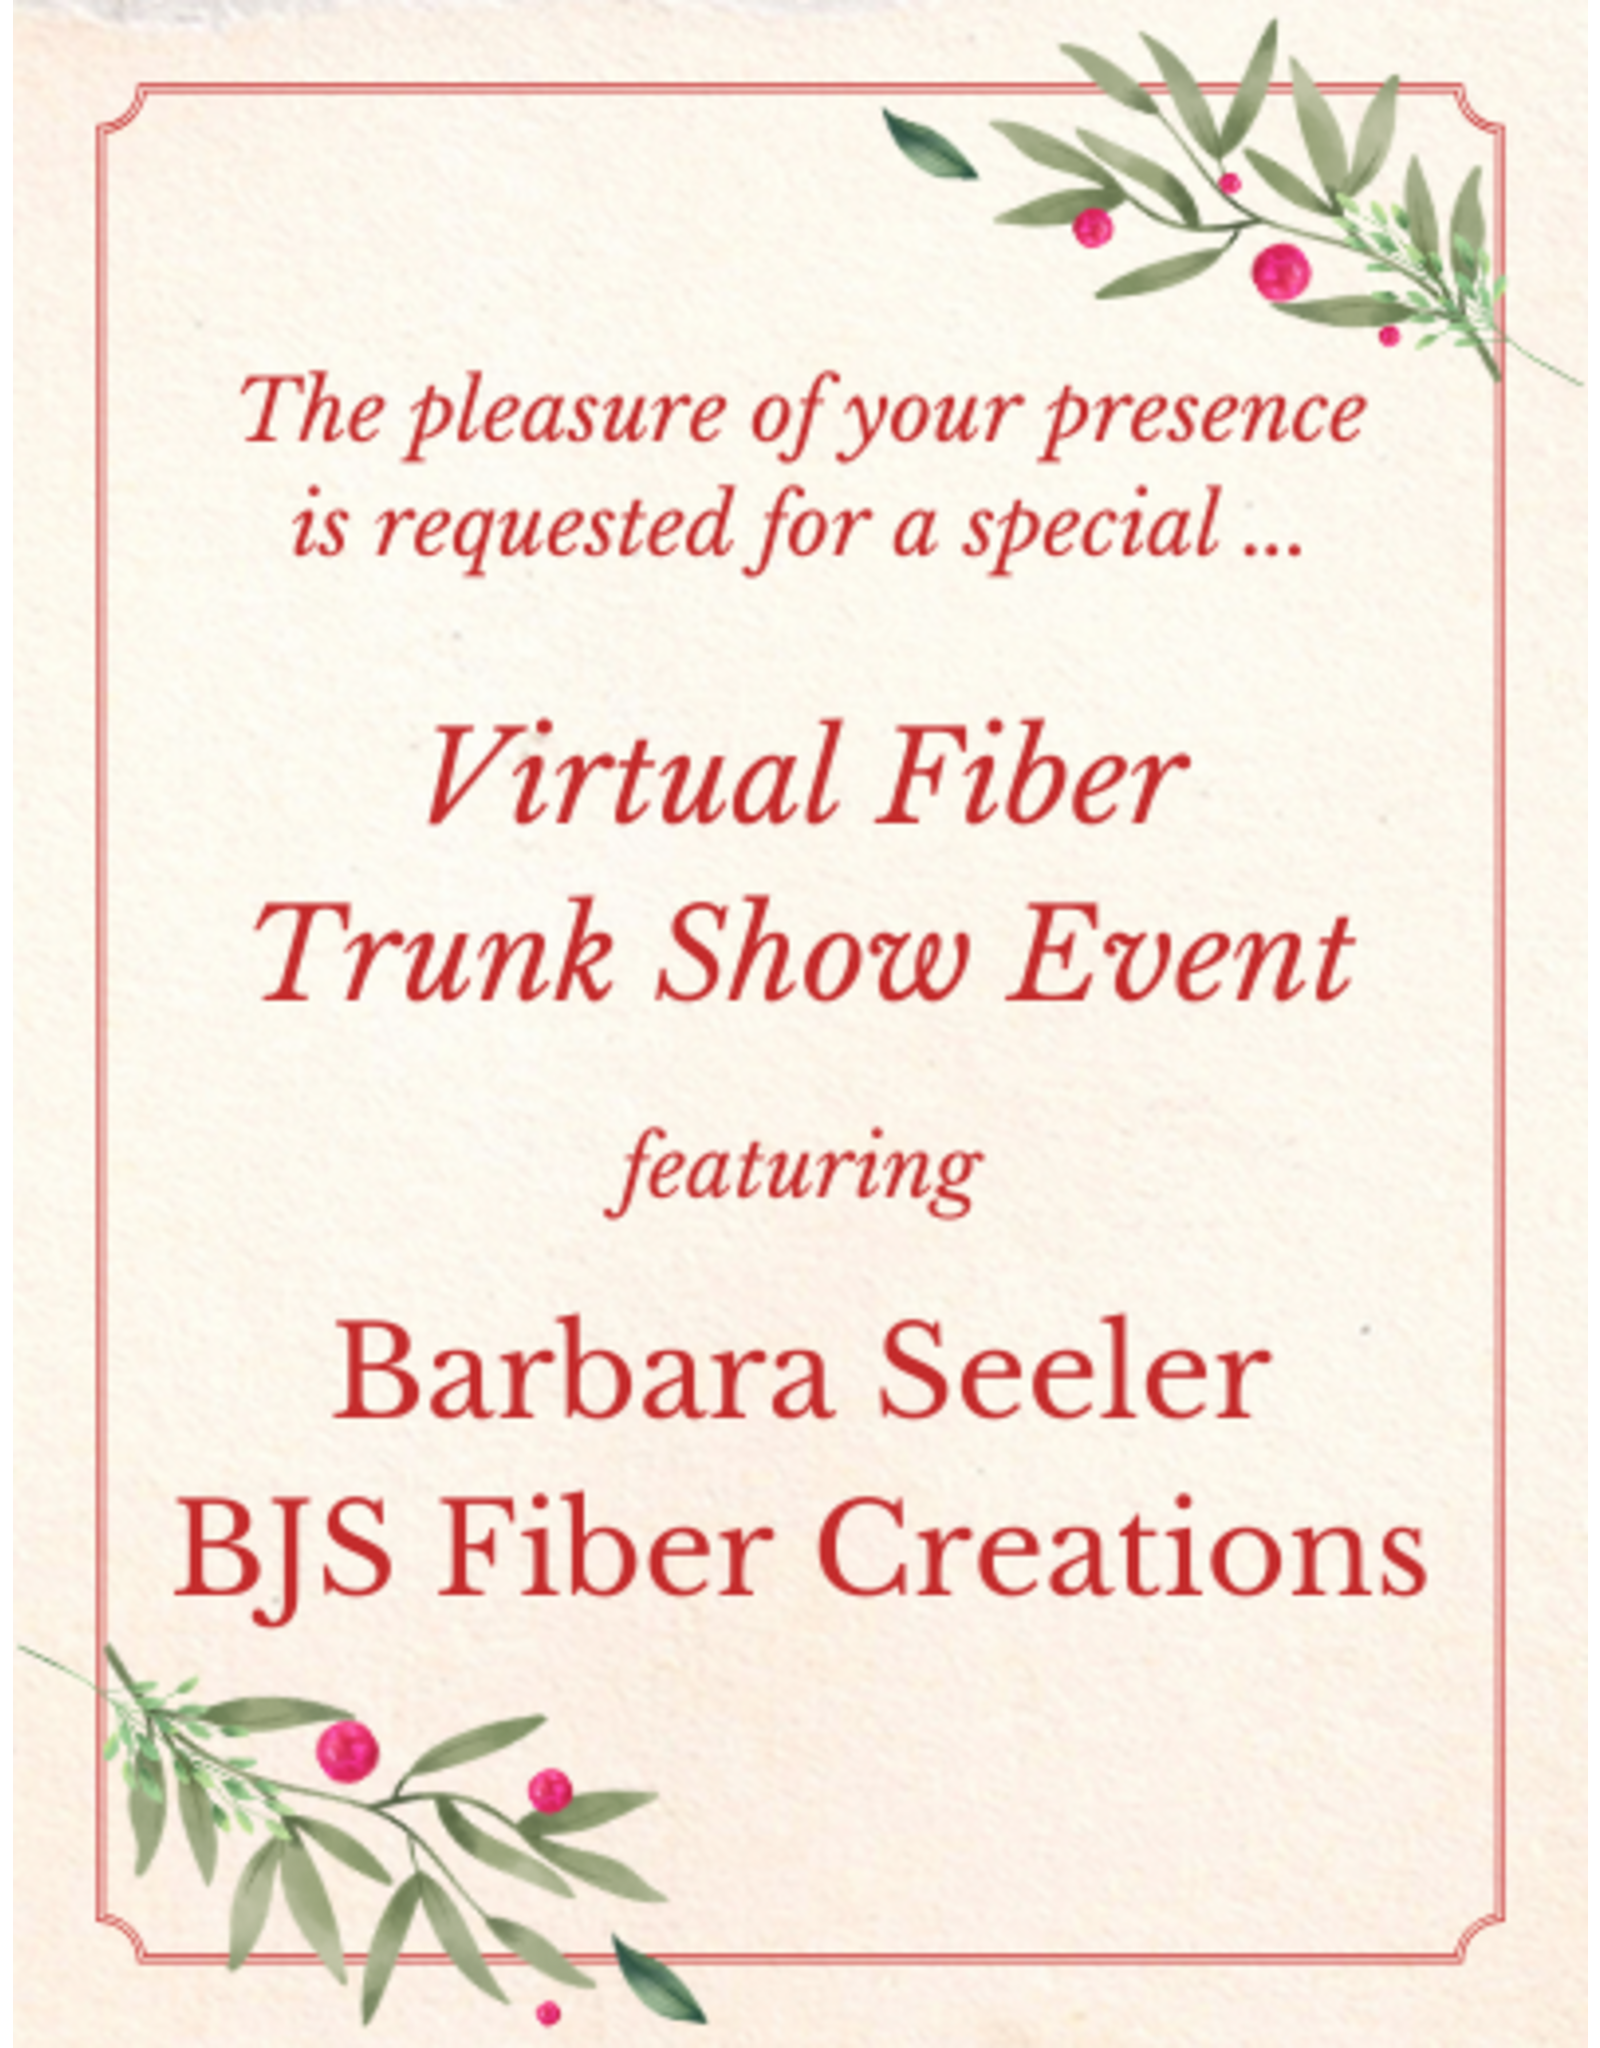 BJS Fiber Creations Registration for Virtual Fiber Trunk Show 12/13 at 1pm